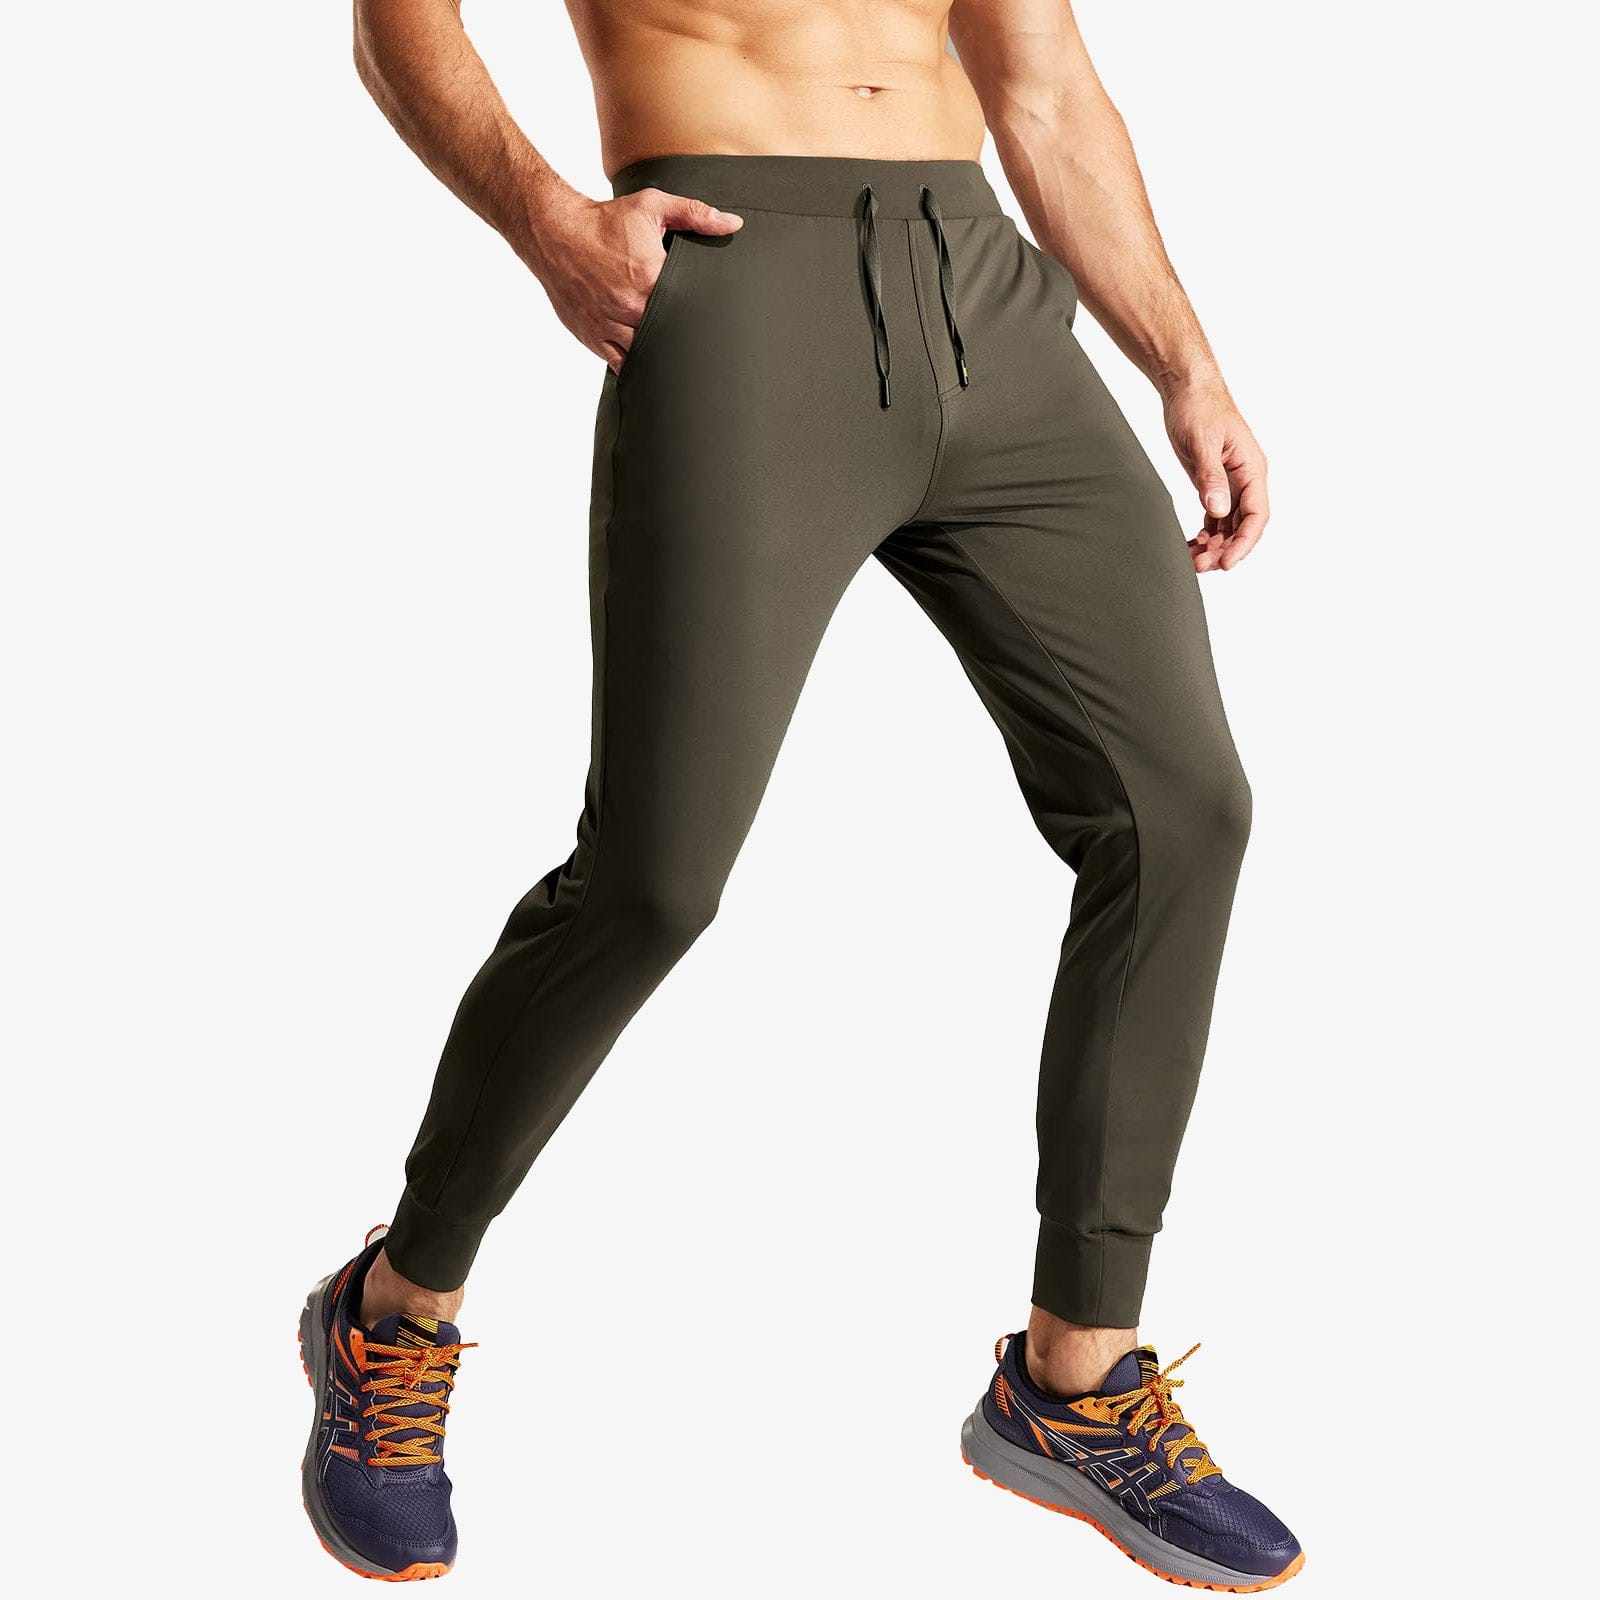 Men's Jogger Sweatpants Slim Fit Nylon Stretch Athletic Pants - Olive Green  / S